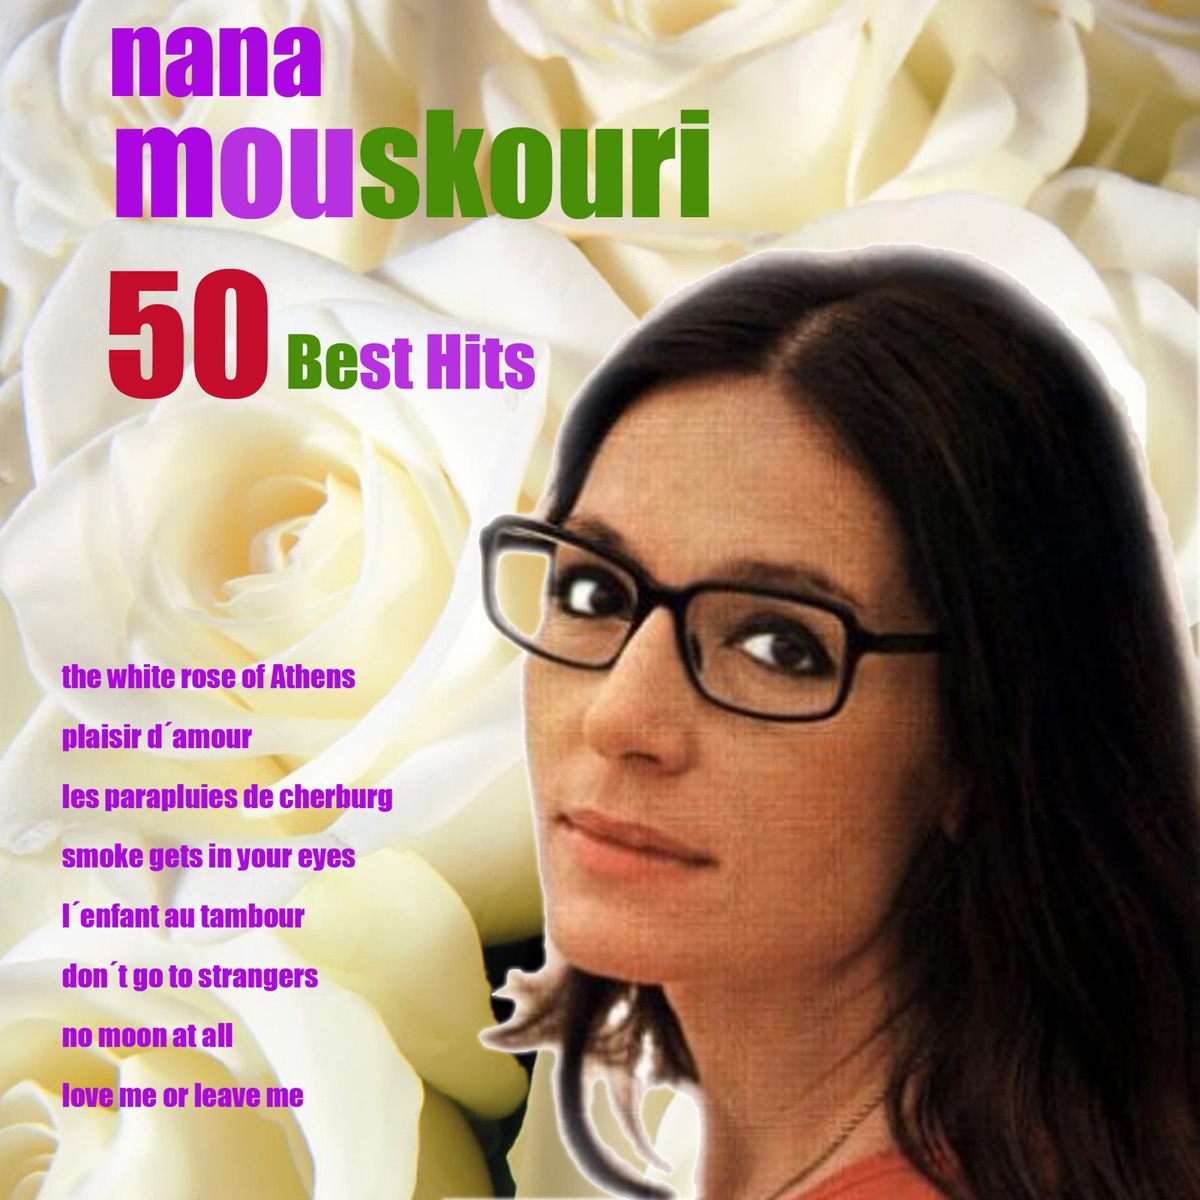 50 Best Hits by Nana Mouskouri on Apple Music